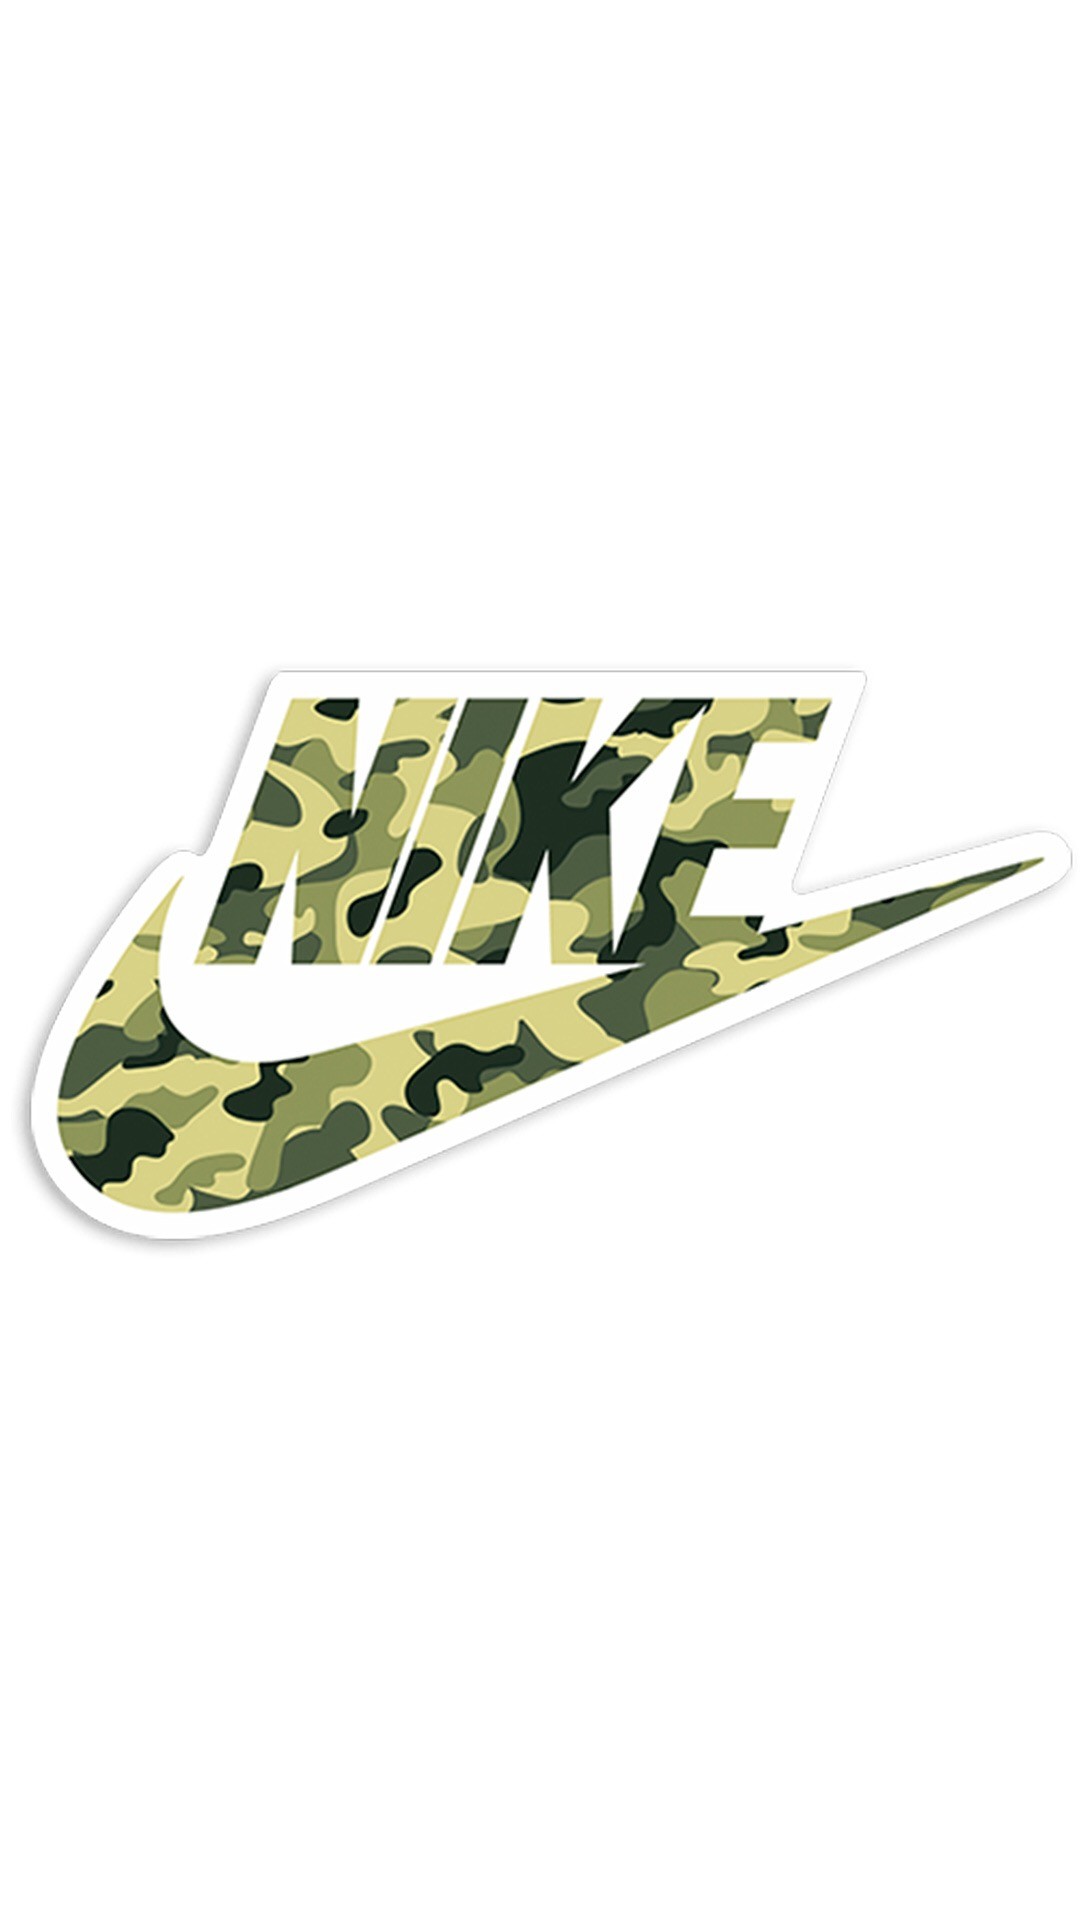 1080x1920 Coole Logos, Camo Hintergrund, Nike Tapete, Nike Logo, Logo Bilder, Nike  Air, Unkraut, Beute, Camouflage